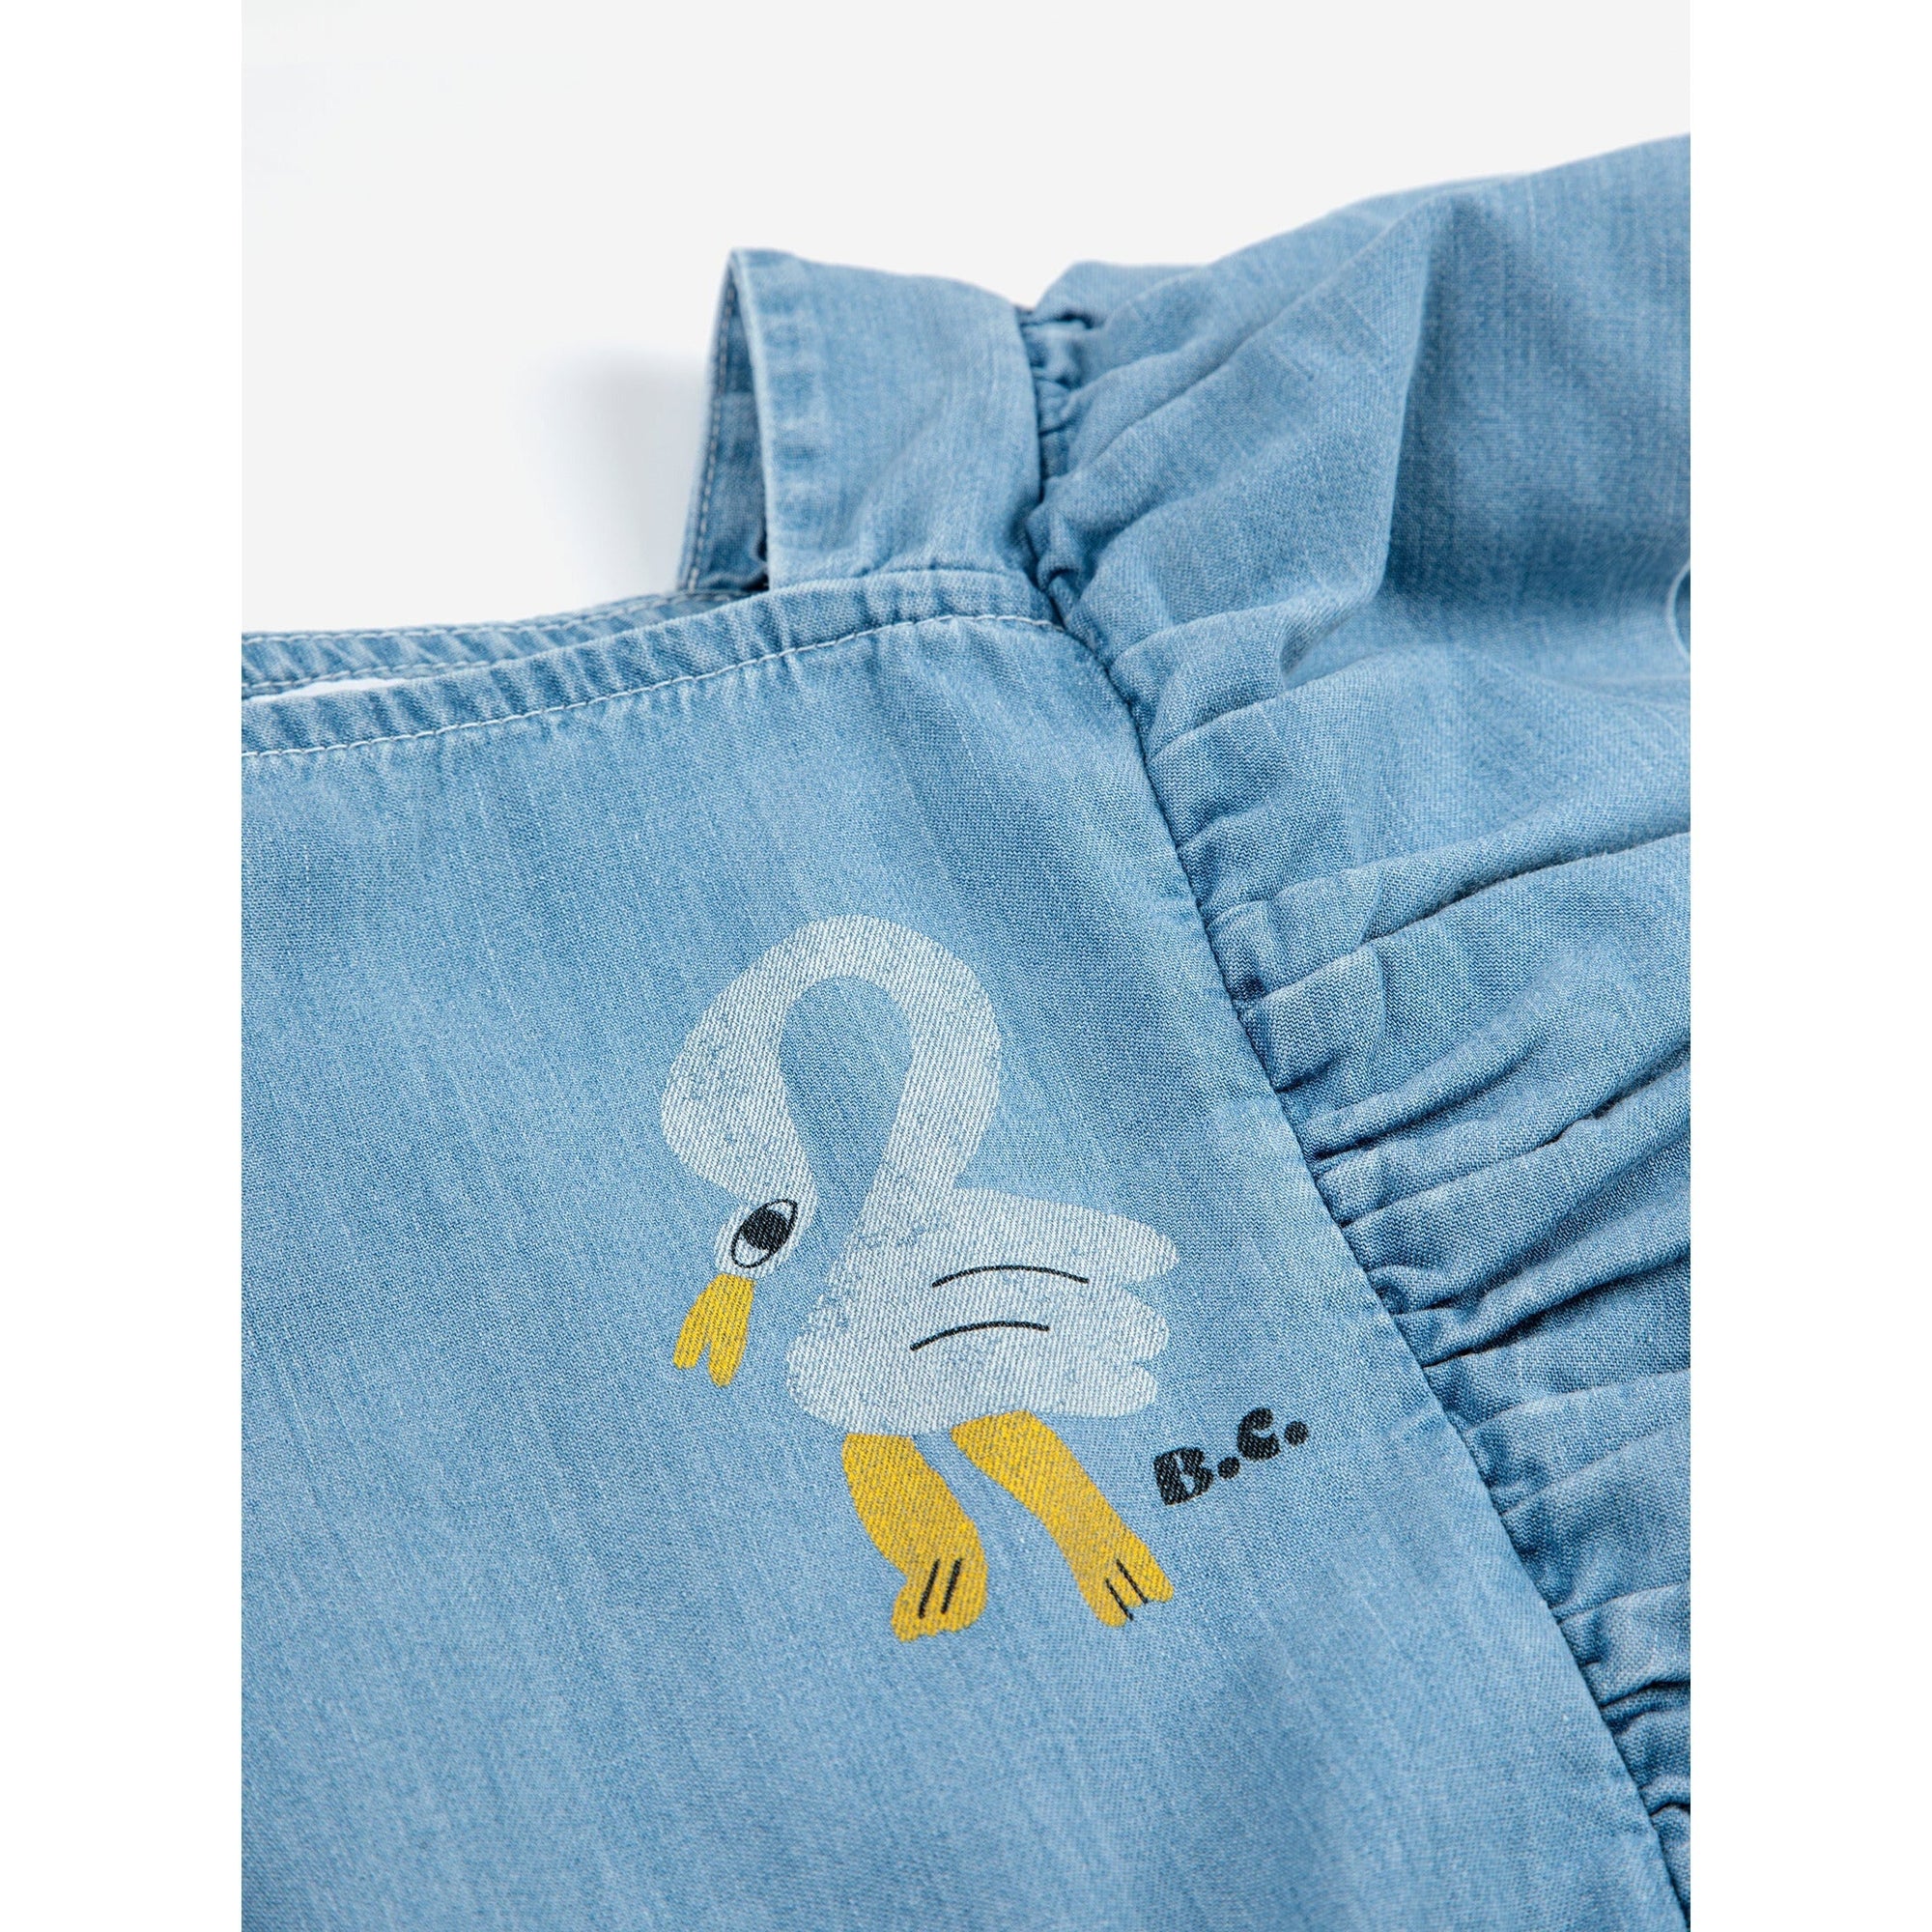 Pelican Denim Ruffle Dress